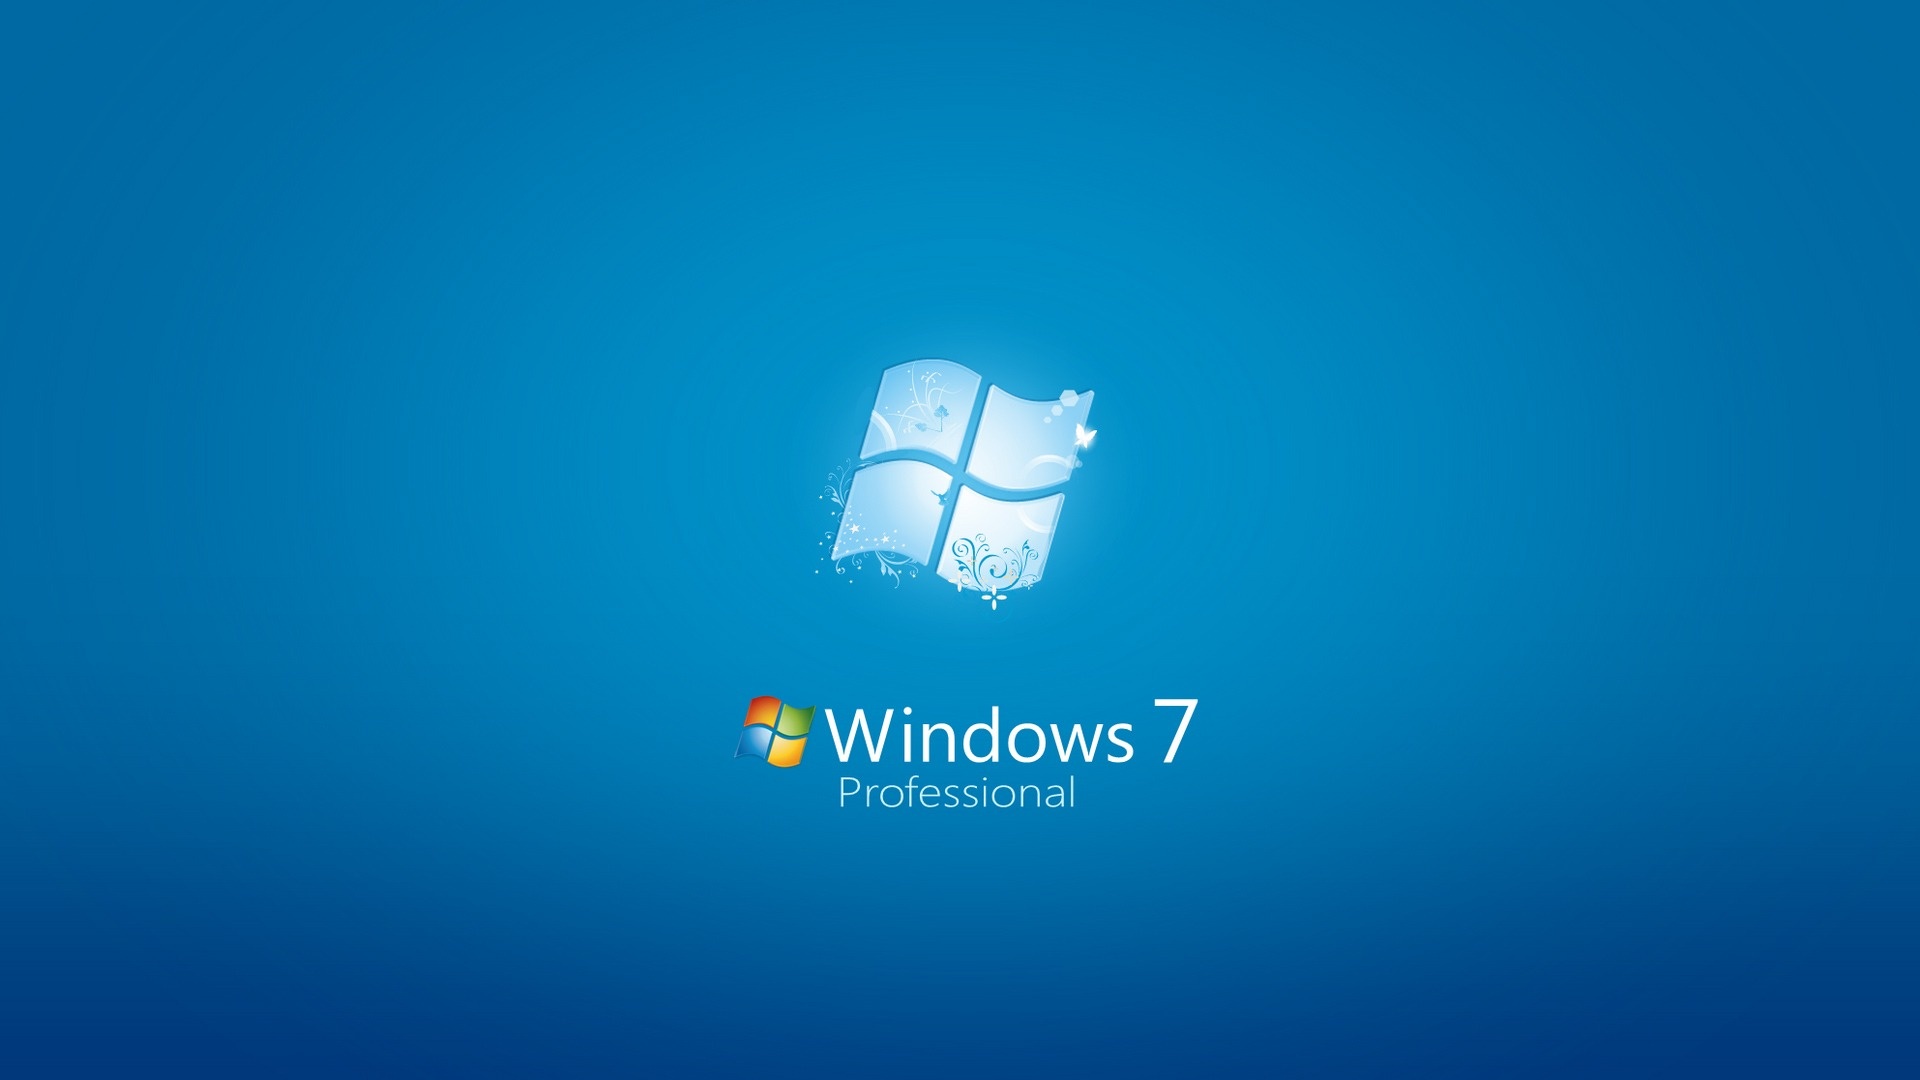 Windows 8 Logo White and Blue Wallpaper 1075x1023px #667541